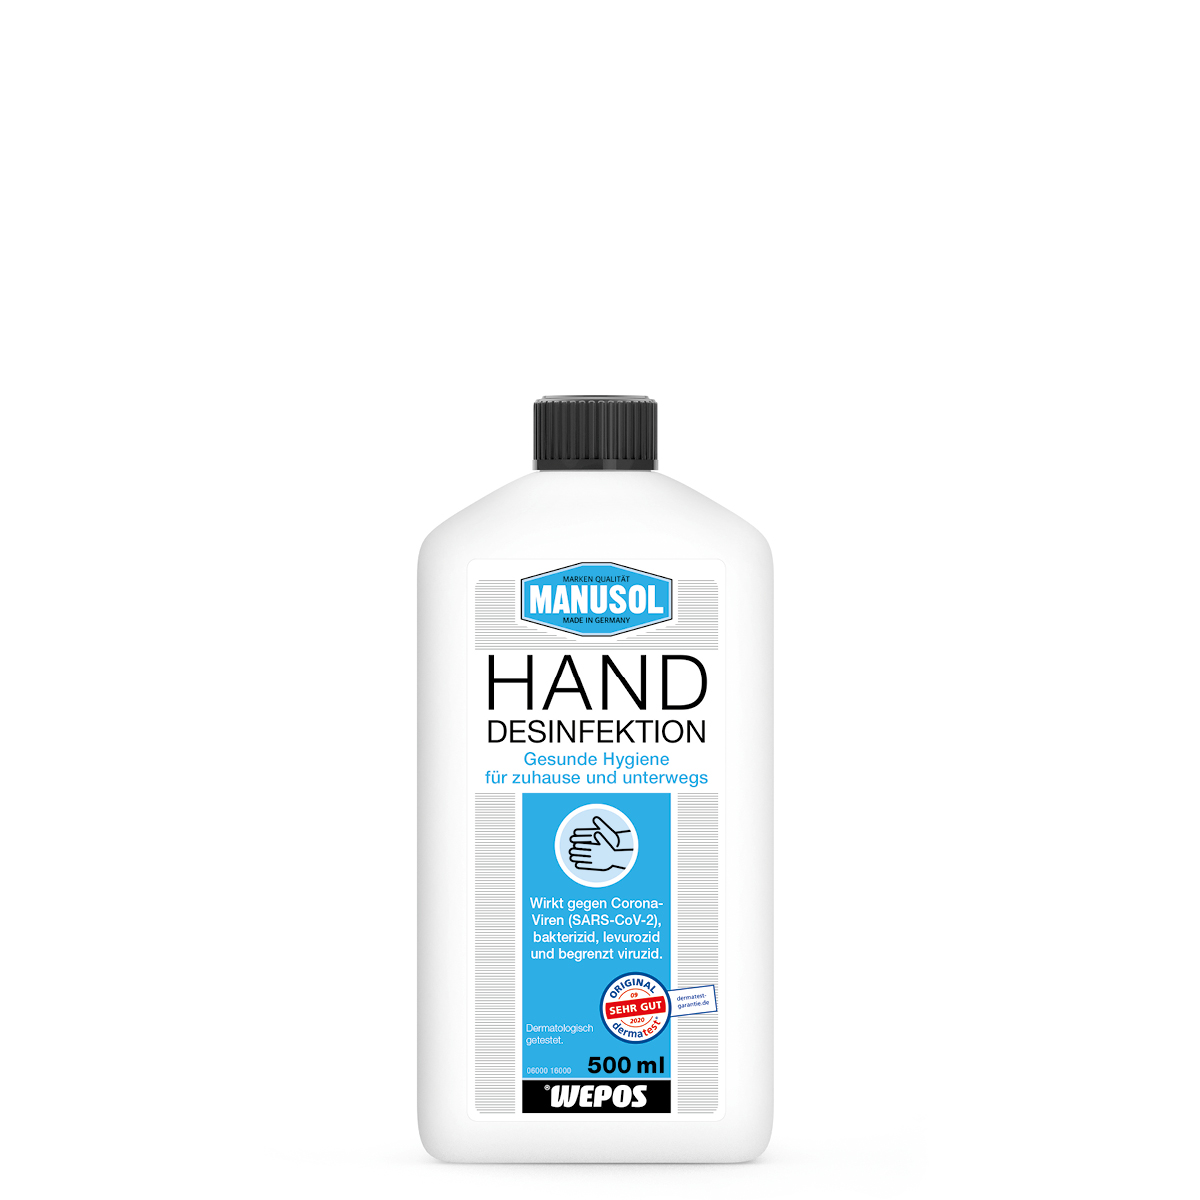 Manusol Hand Desinfektion